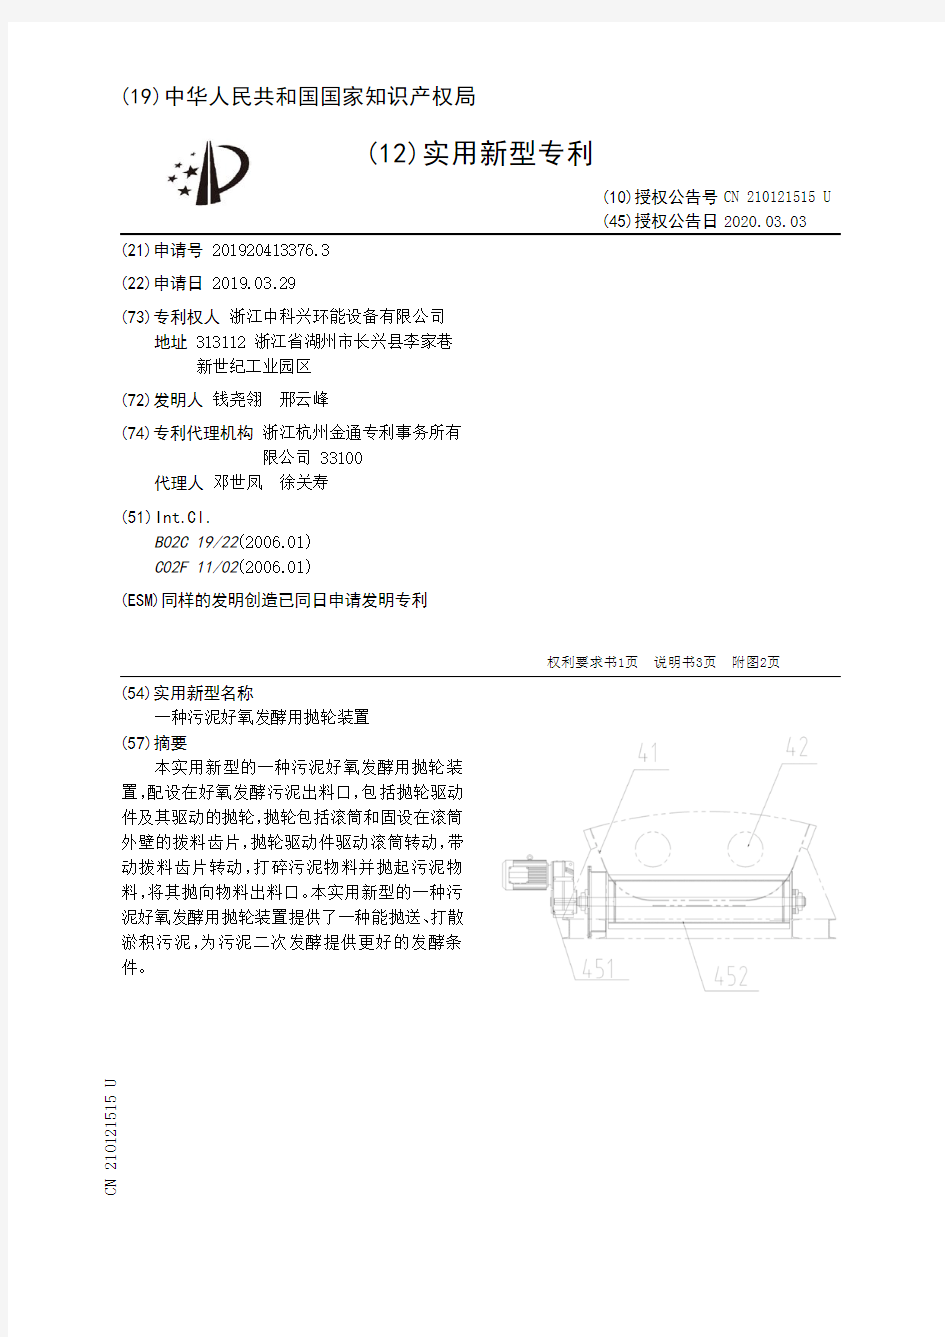 【CN210121515U】一种污泥好氧发酵用抛轮装置【专利】